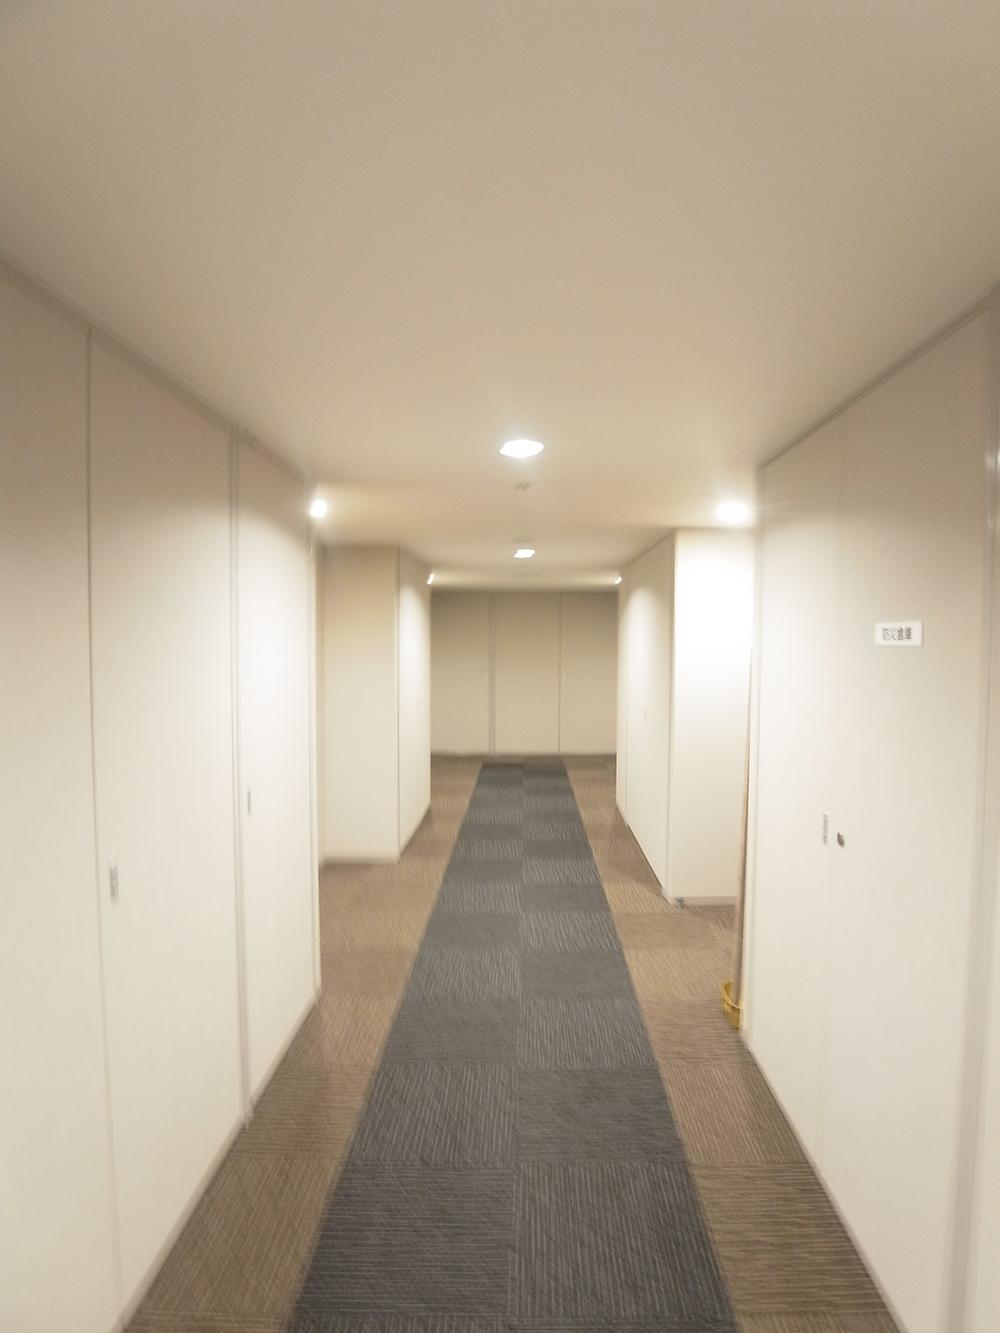 Other common areas. Common area (inner hallway)